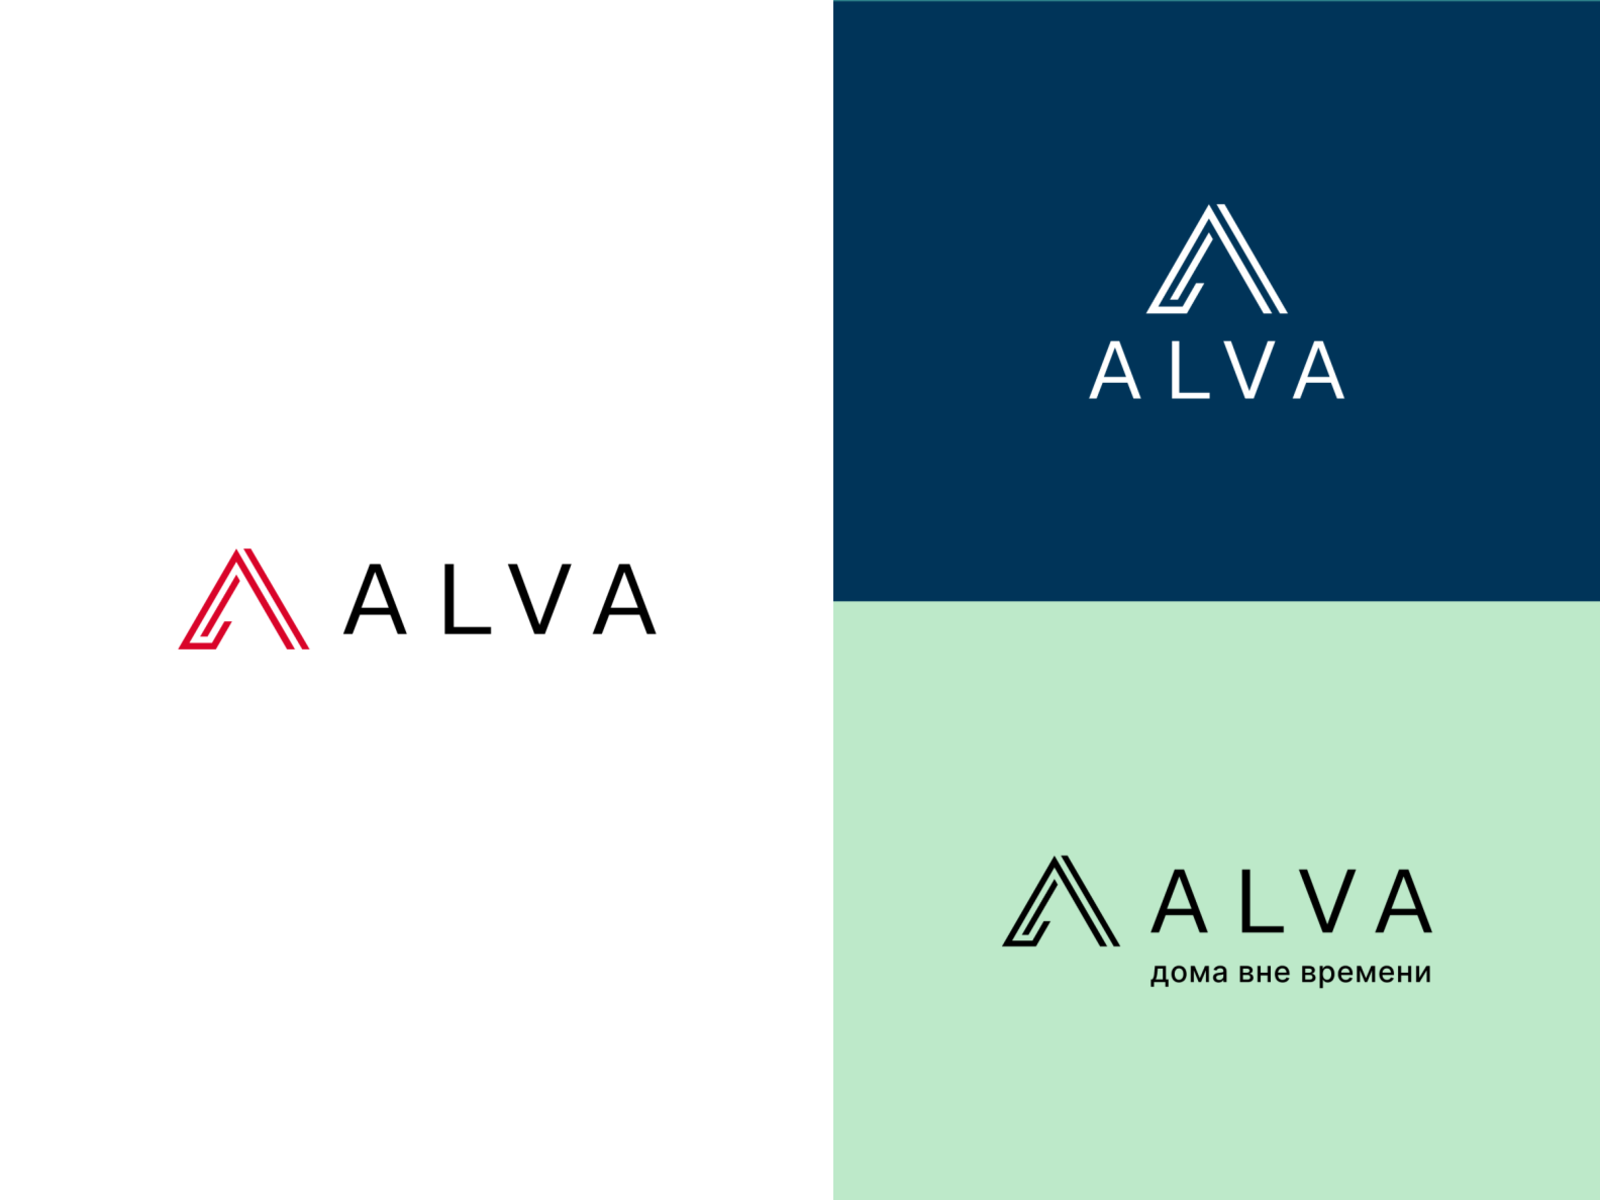 Alva's Education Foundation